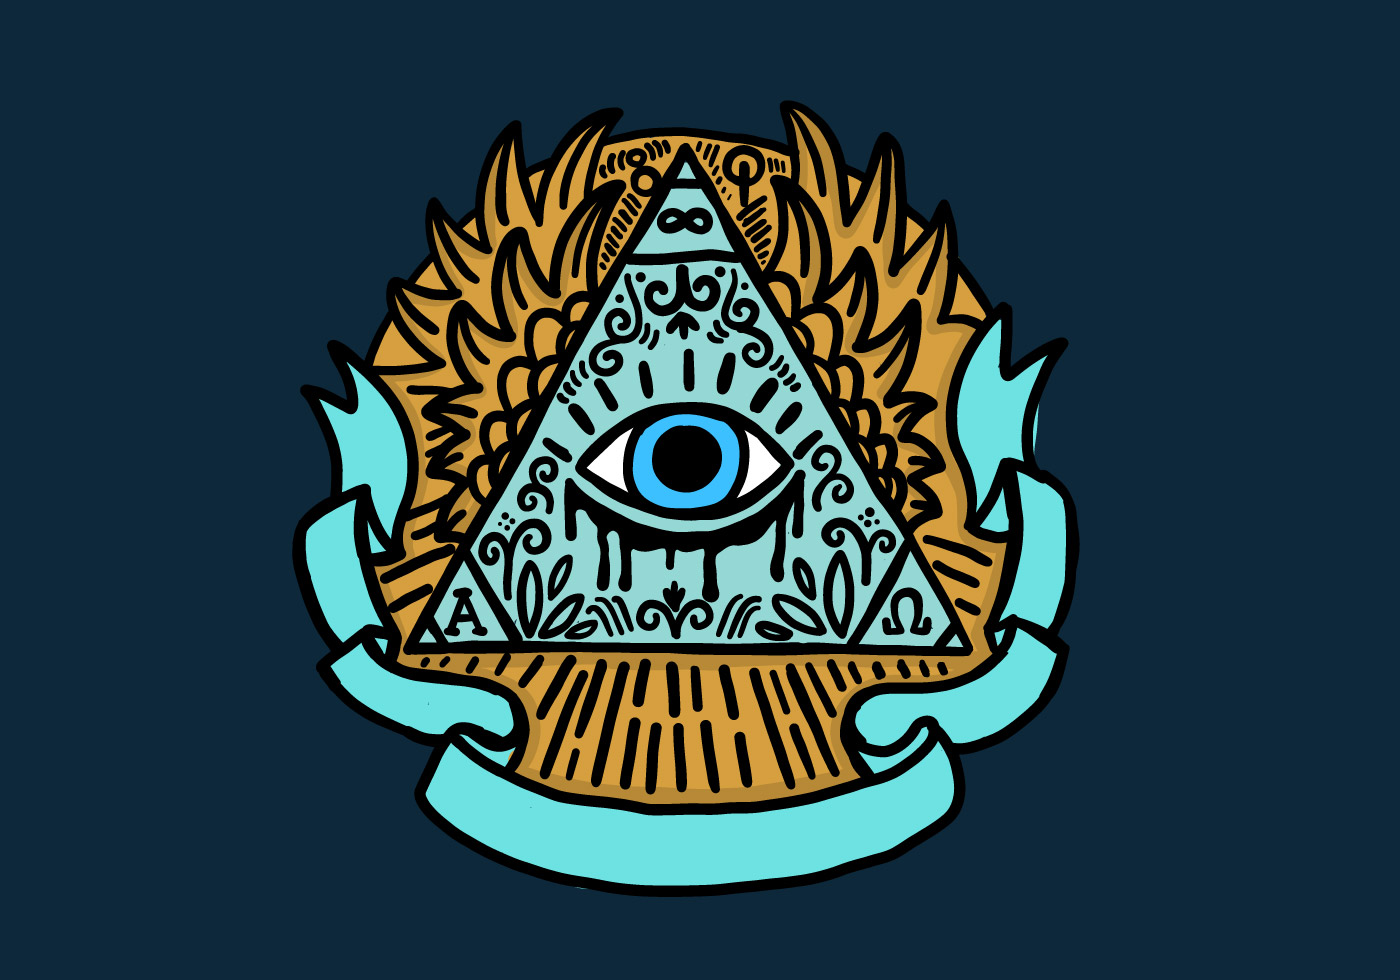 Illuminati eye pyramid - Download Free Vectors, Clipart ...
